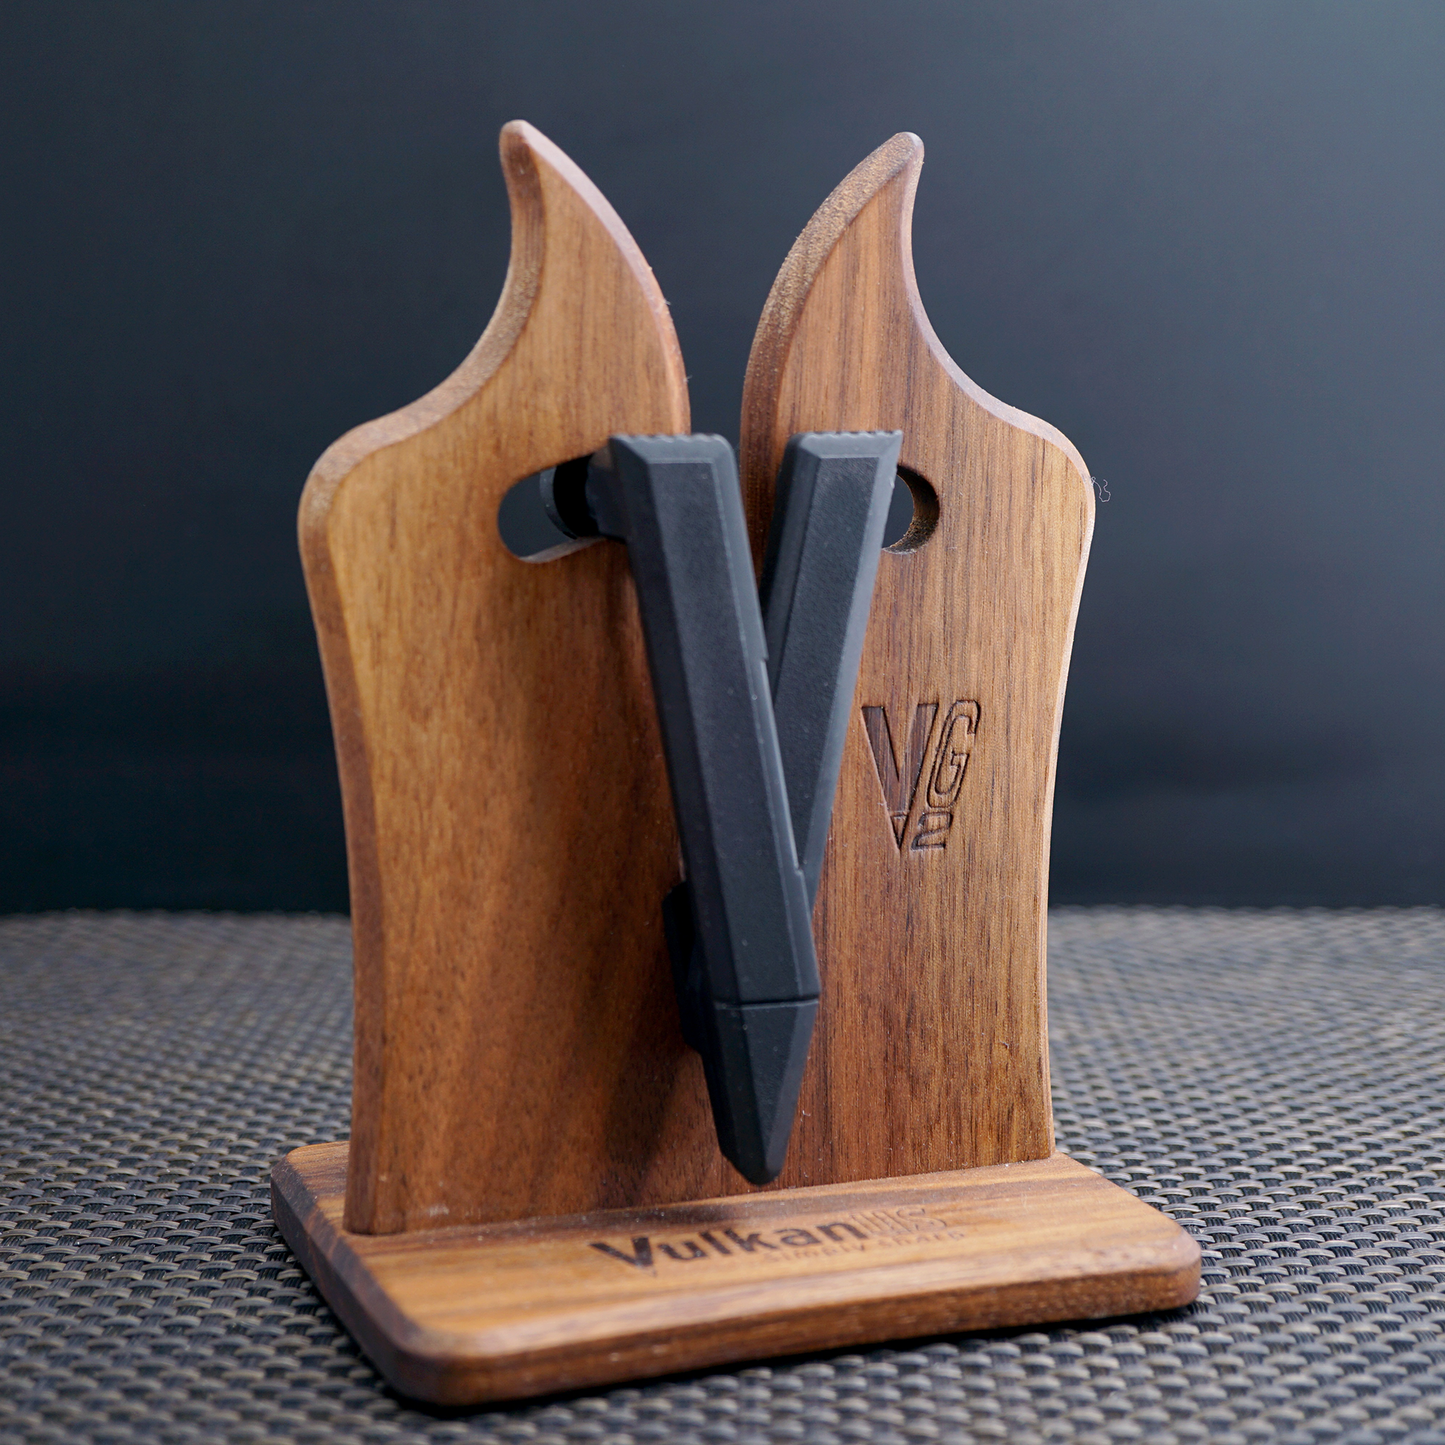 VulkanUS VG2 Wood aus heimischen Edelholz